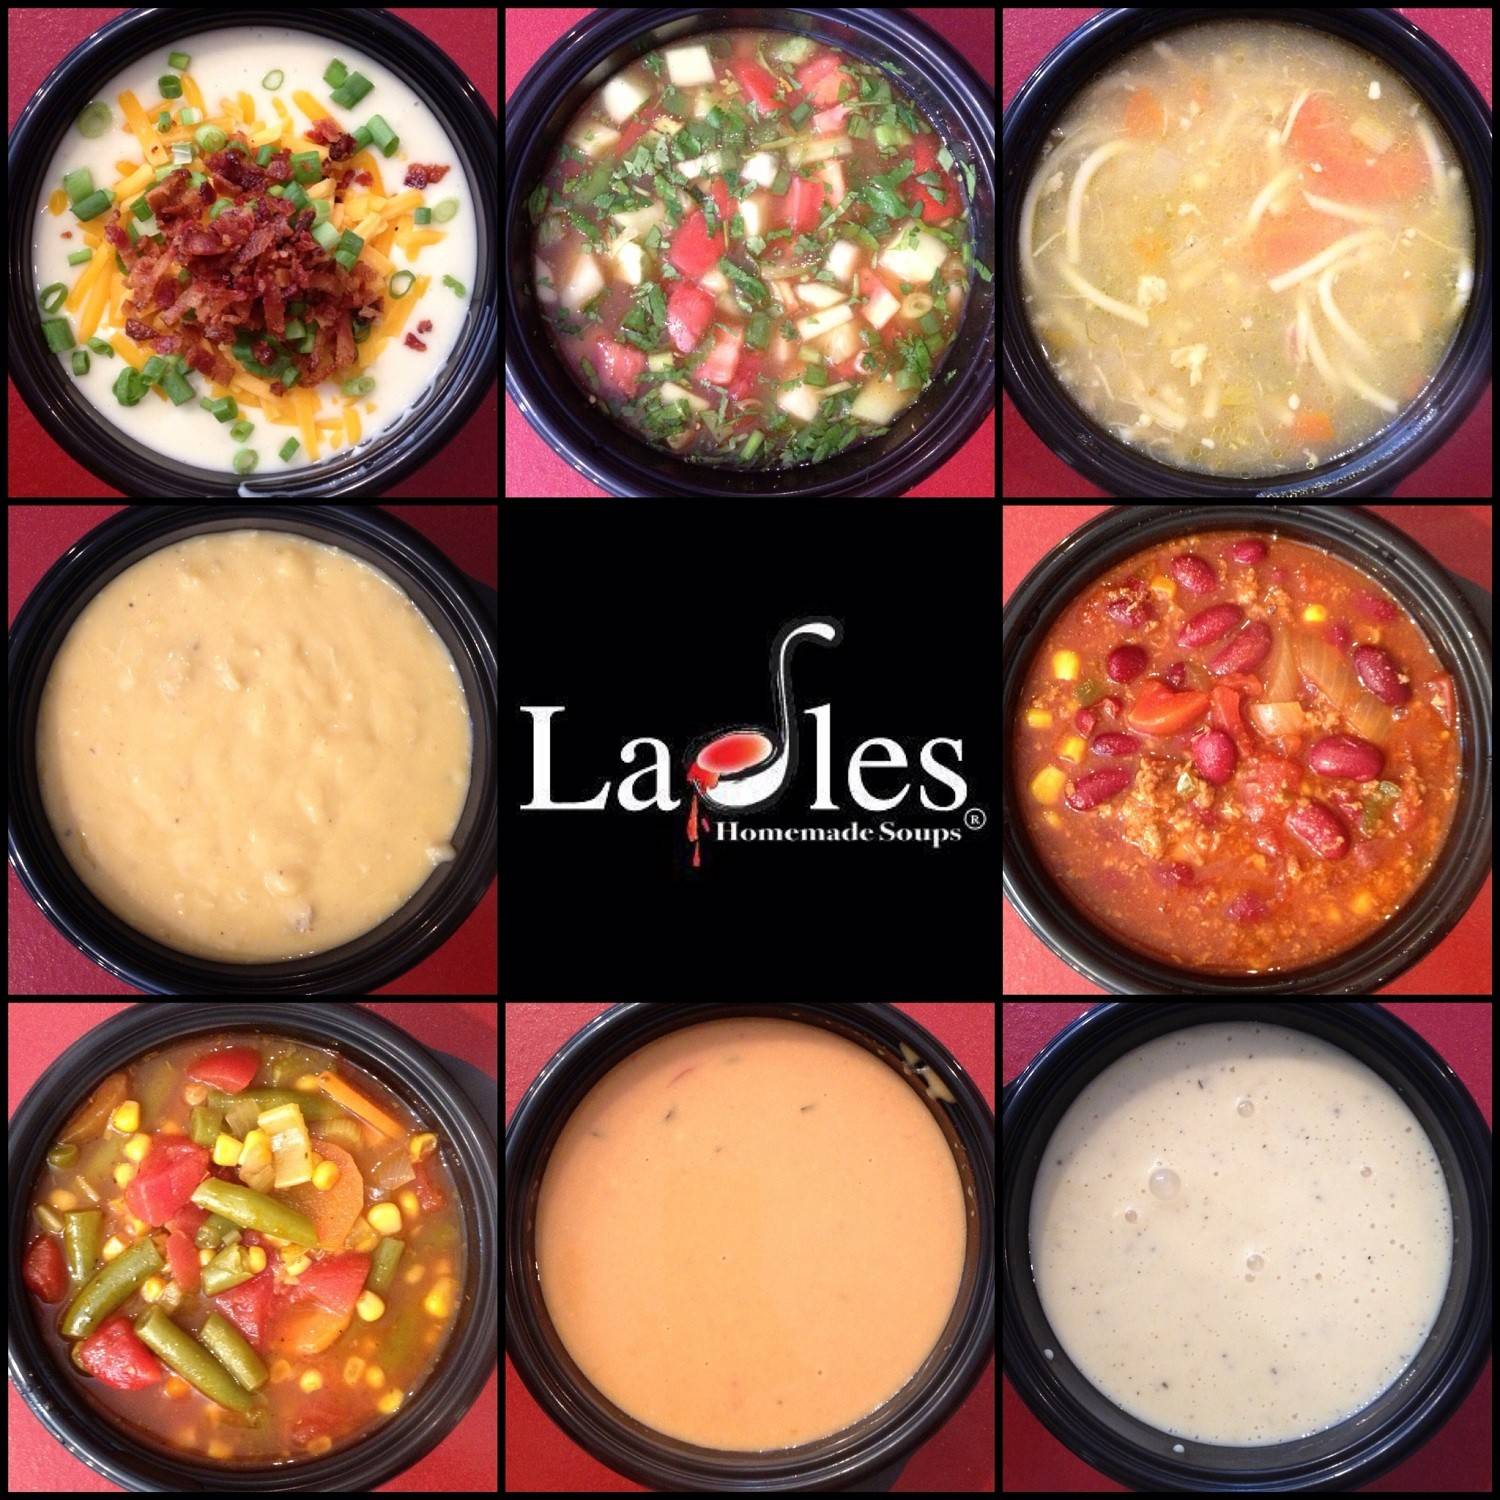 Ladles Soups – “Hot Soup for Cool People” ‹